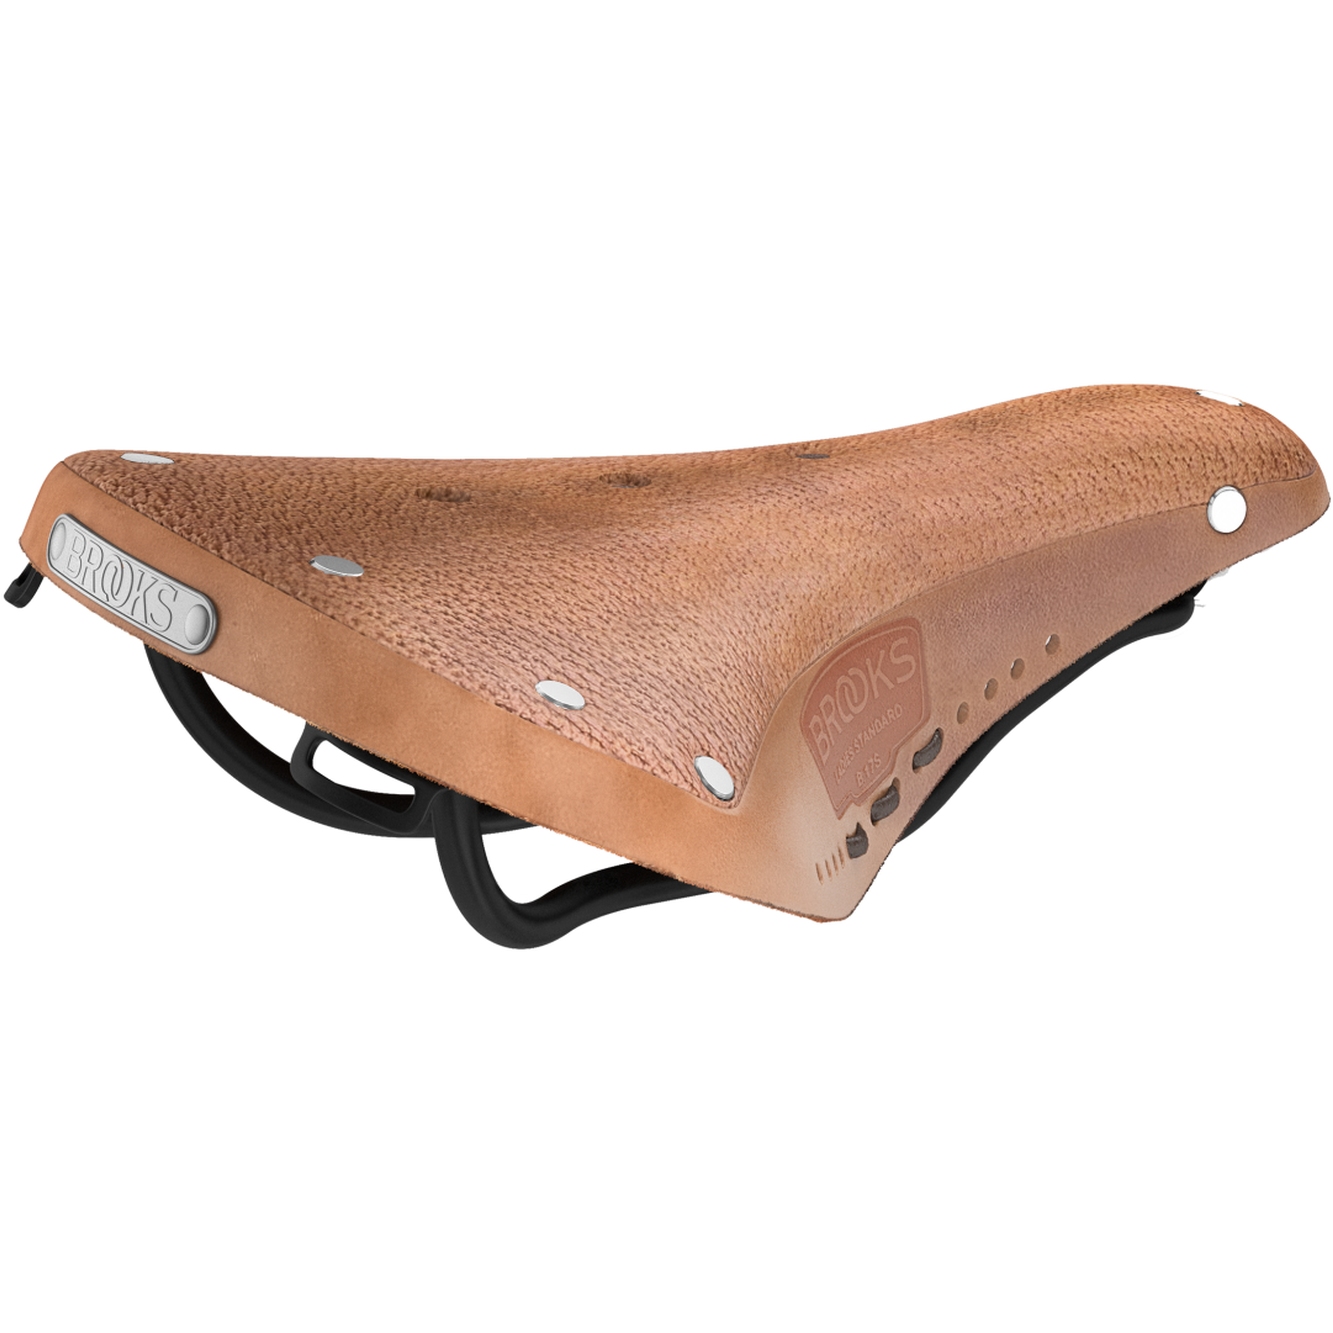 Productfoto van Brooks B17 Softened Short Bend Leather Saddle - Dark Tan